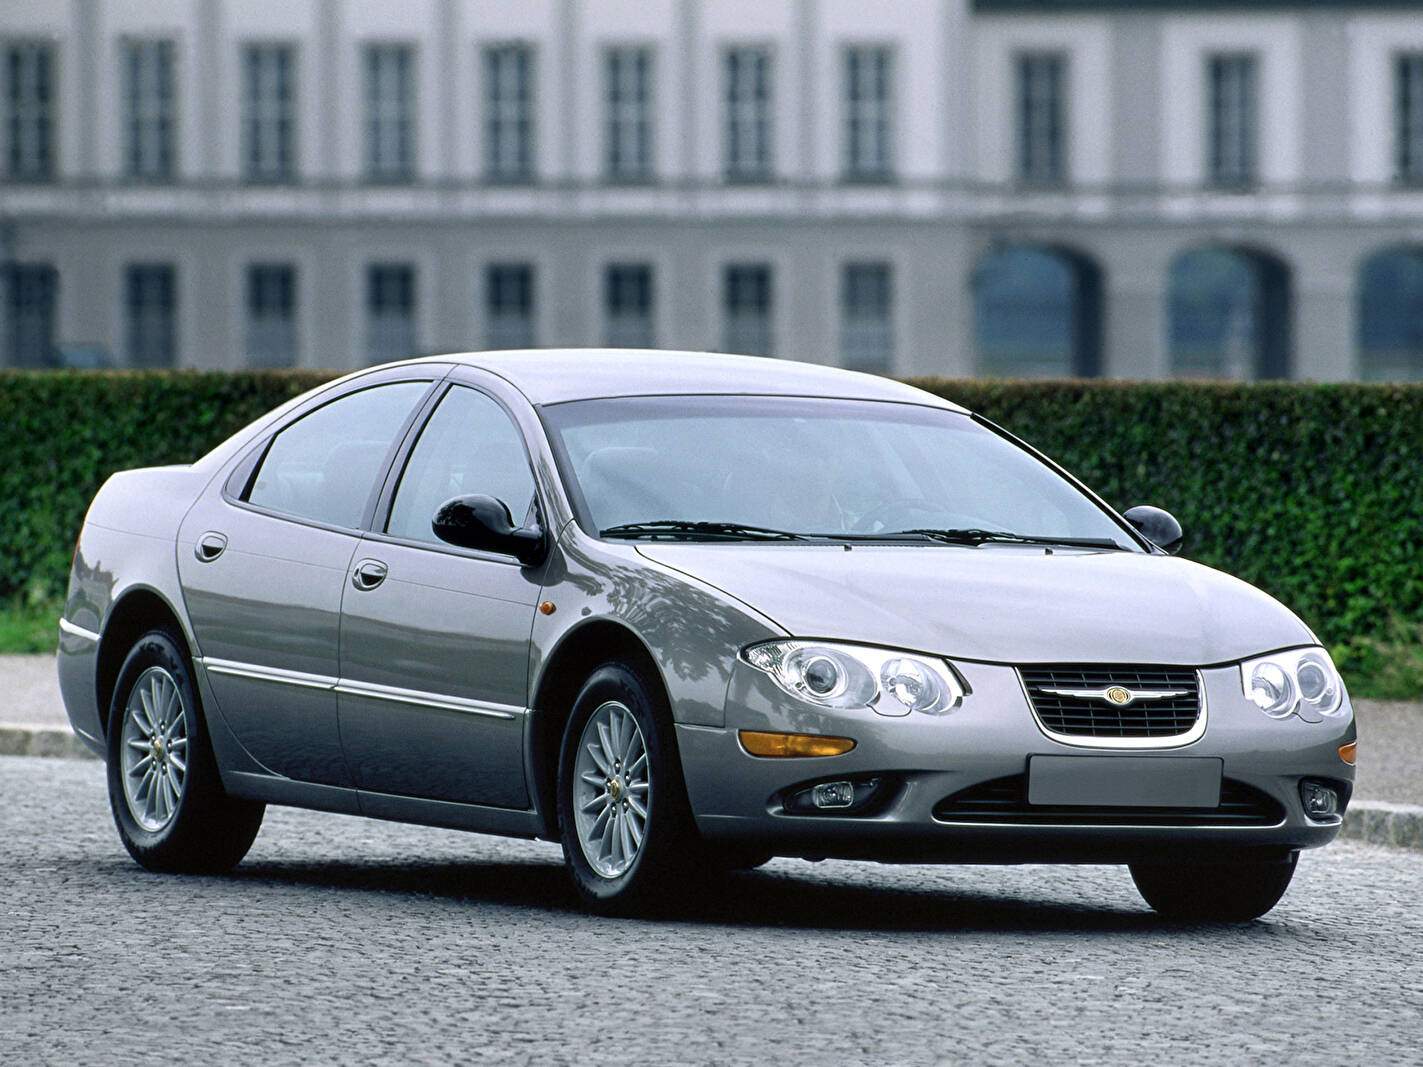 Fiche technique Chrysler 300M 2.7 V6 (19992004)